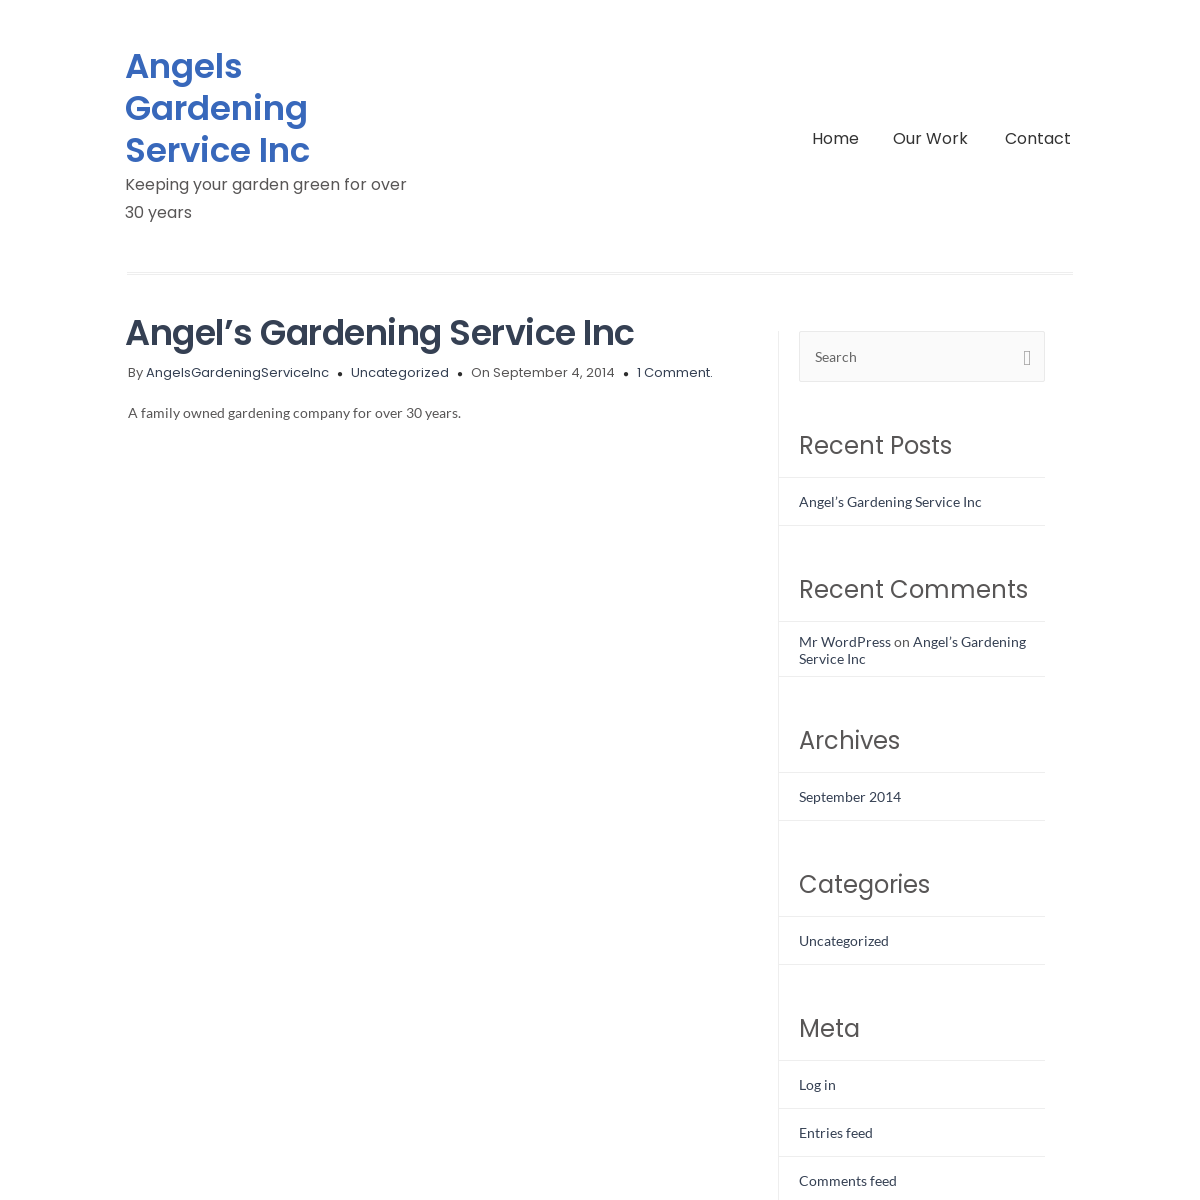 A complete backup of angelsgardeningserviceinc.com